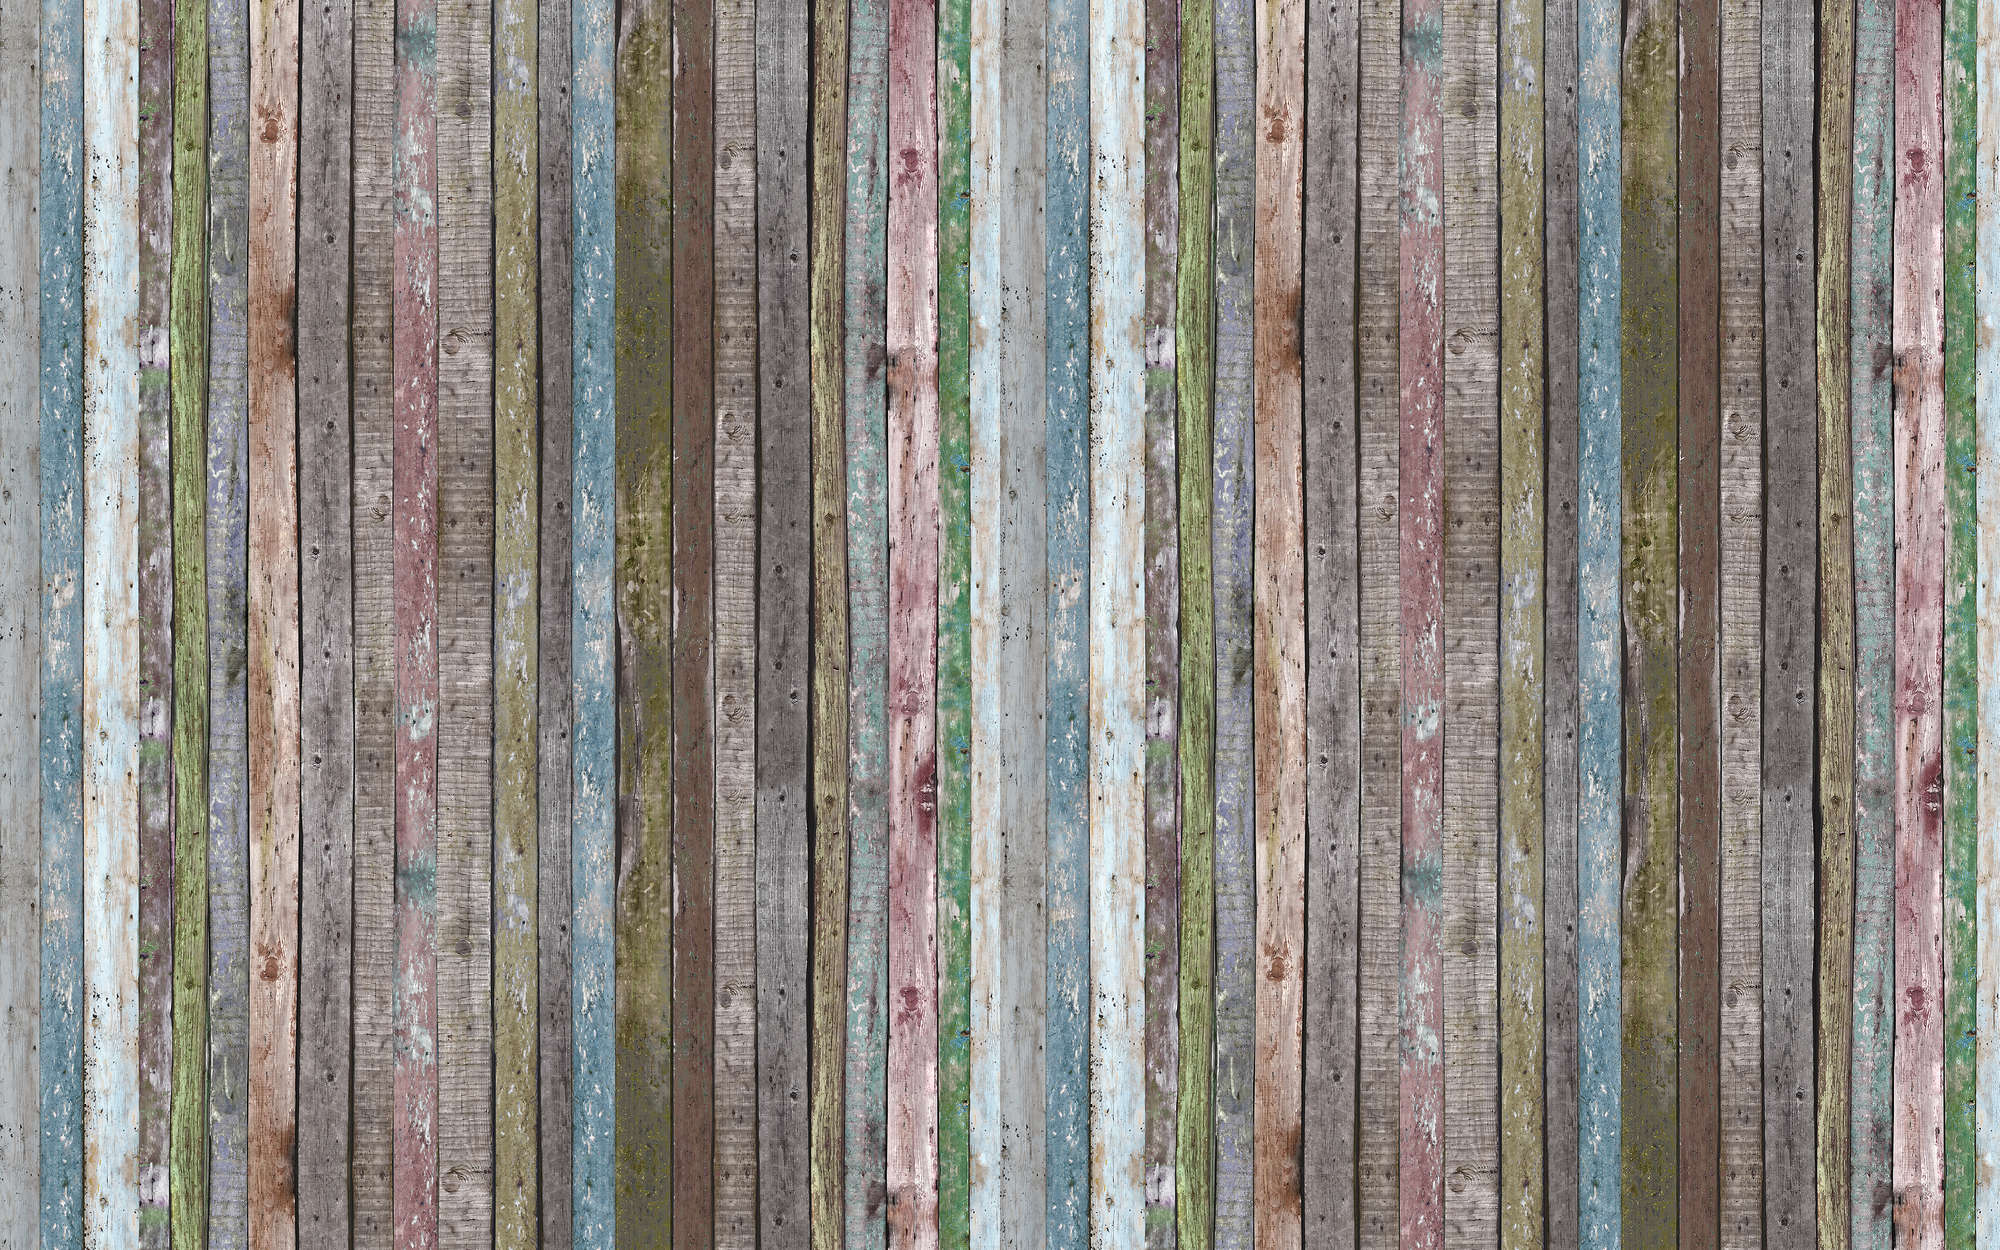             Fototapete Streifenbalken aus Holz – Premium Glattvlies
        